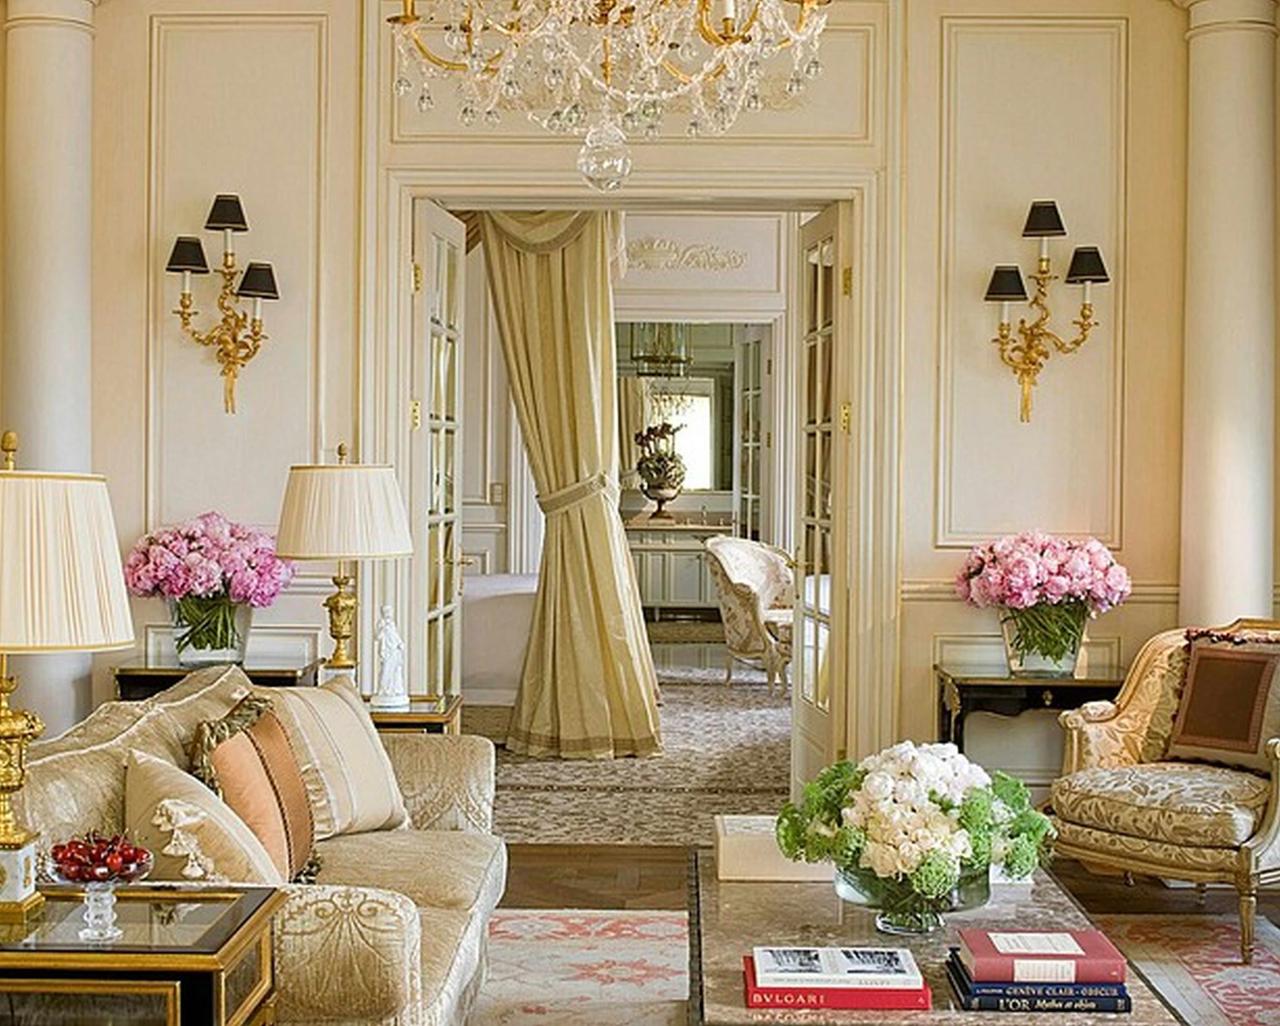 Parisian Chic: Romantic French-Inspired Bedroom Decor